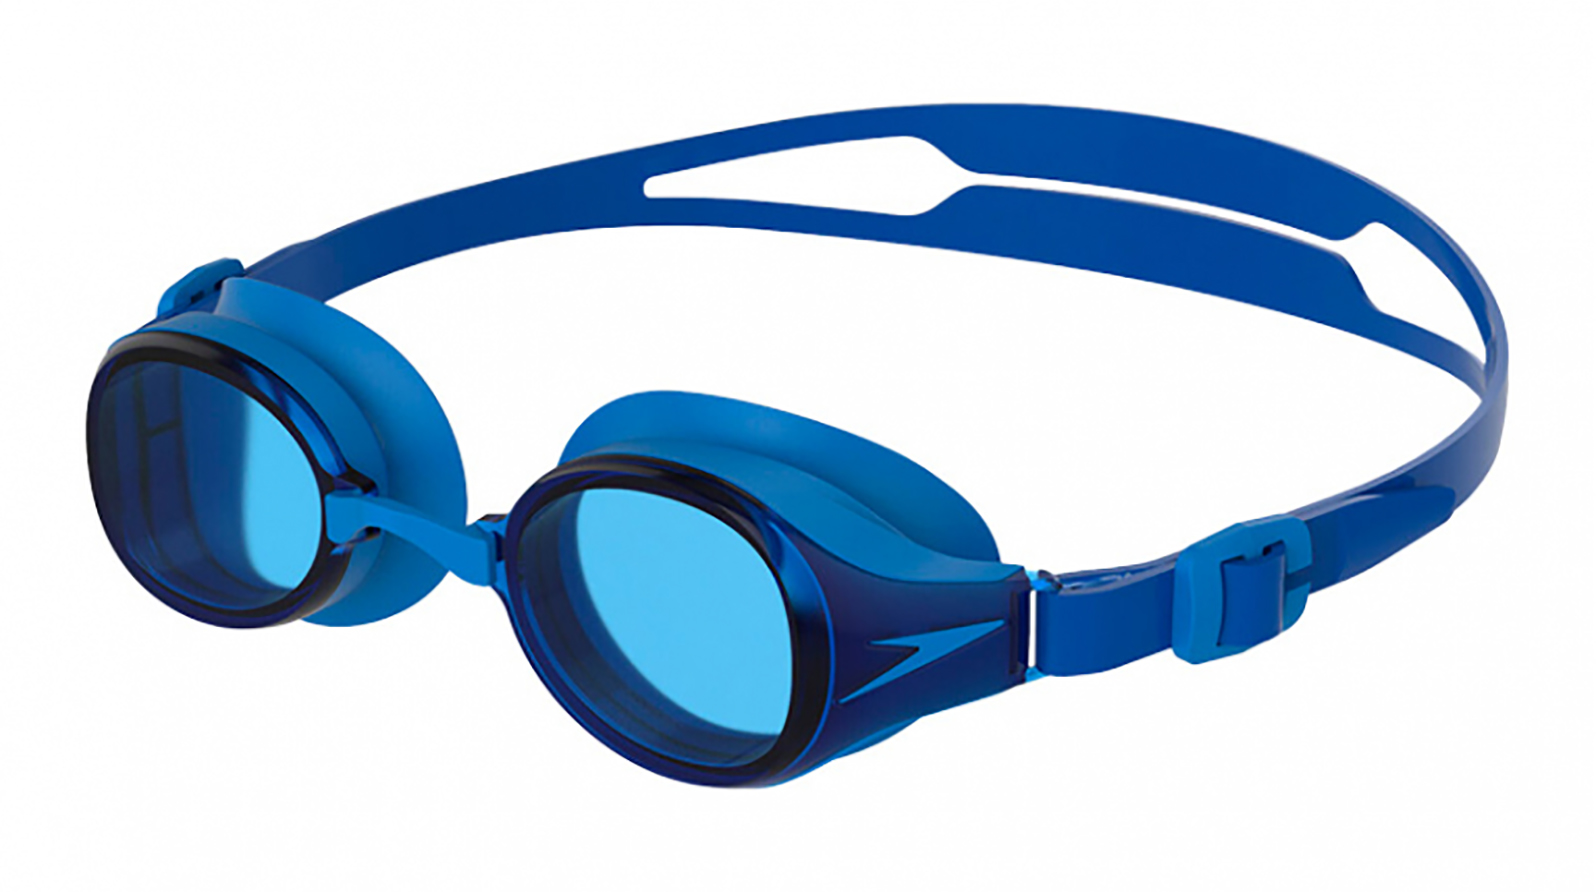 Speedo Очки для плавания Hydropure Optical F809 -2,0 speedo очки для плавания hydropure optical f809 3 5